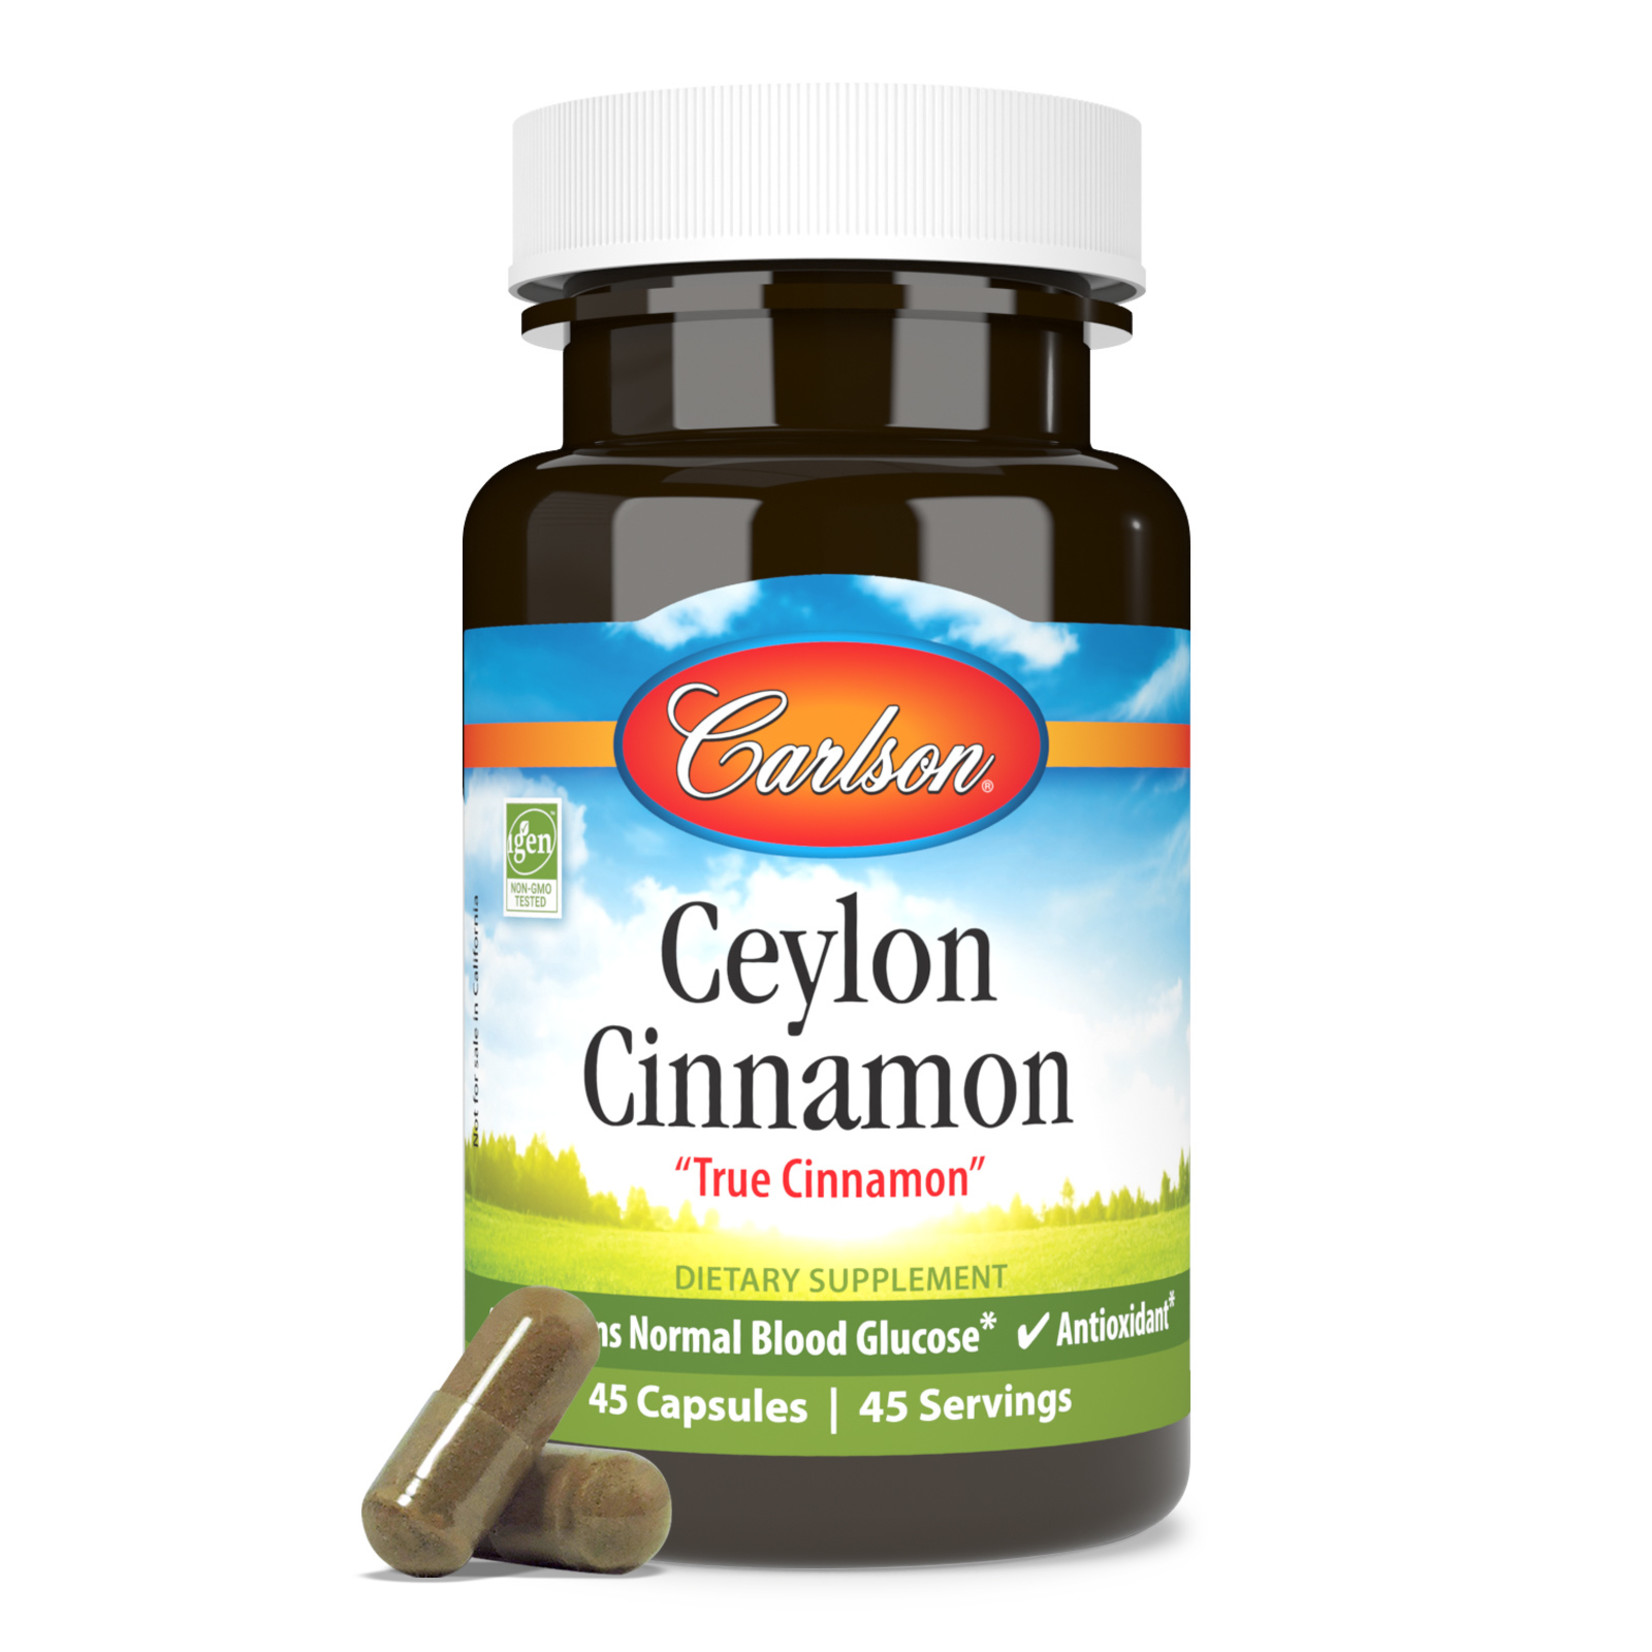 Carlson Carlson - Ceylon Cinnamon - 45 Capsules